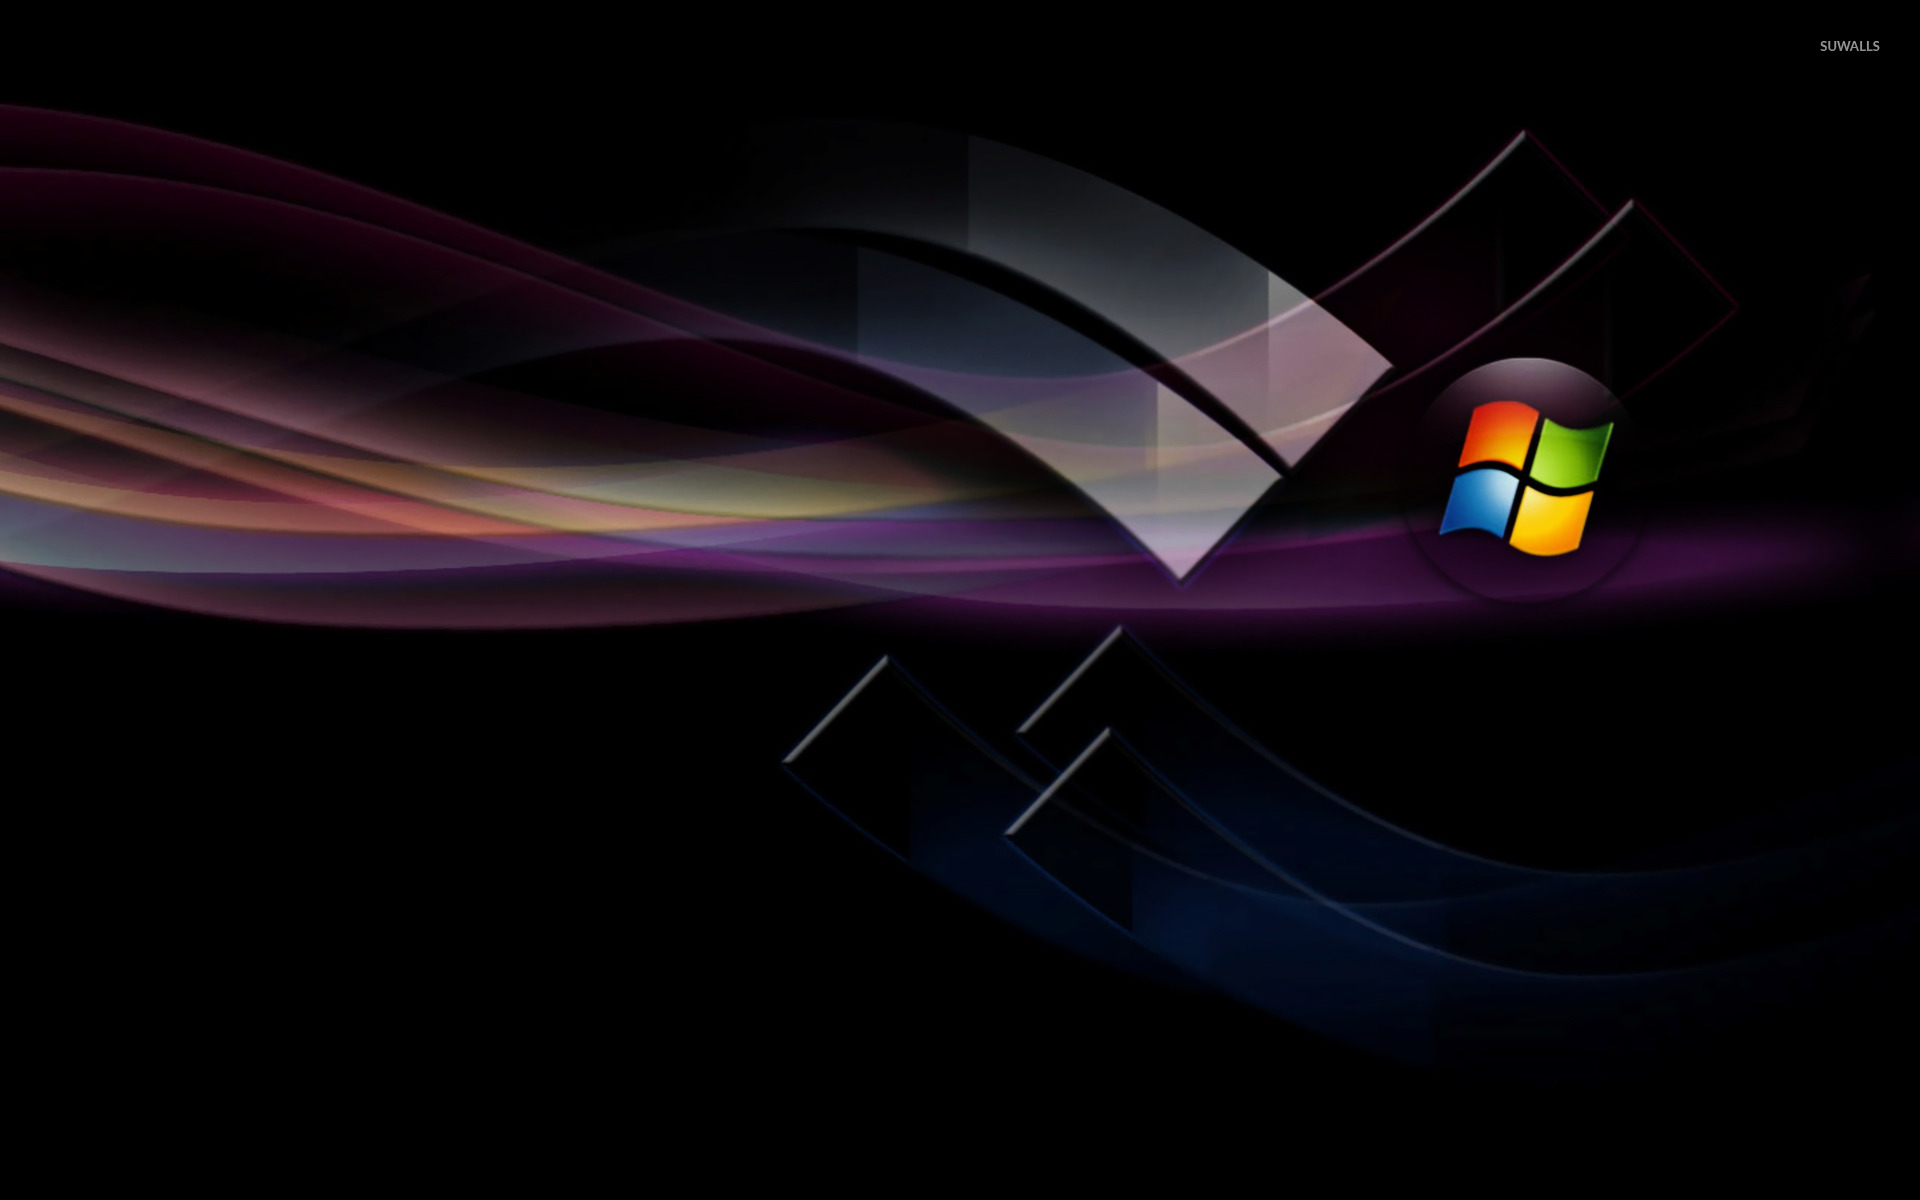 Microsoft Windows Vista оранжевый фон без смс